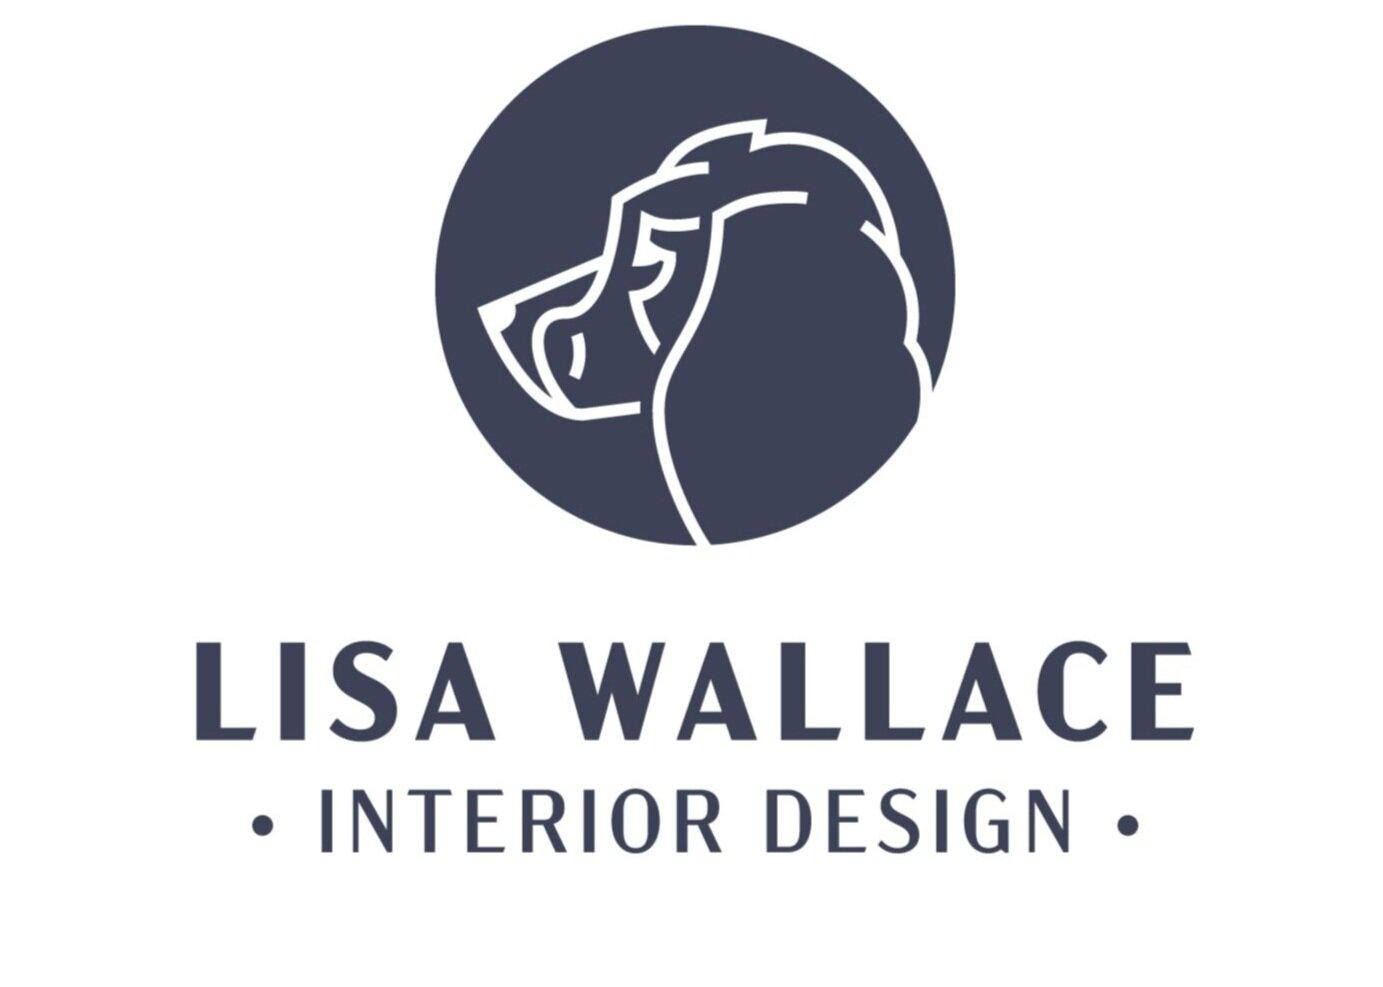 Lisa Wallace Interior Design